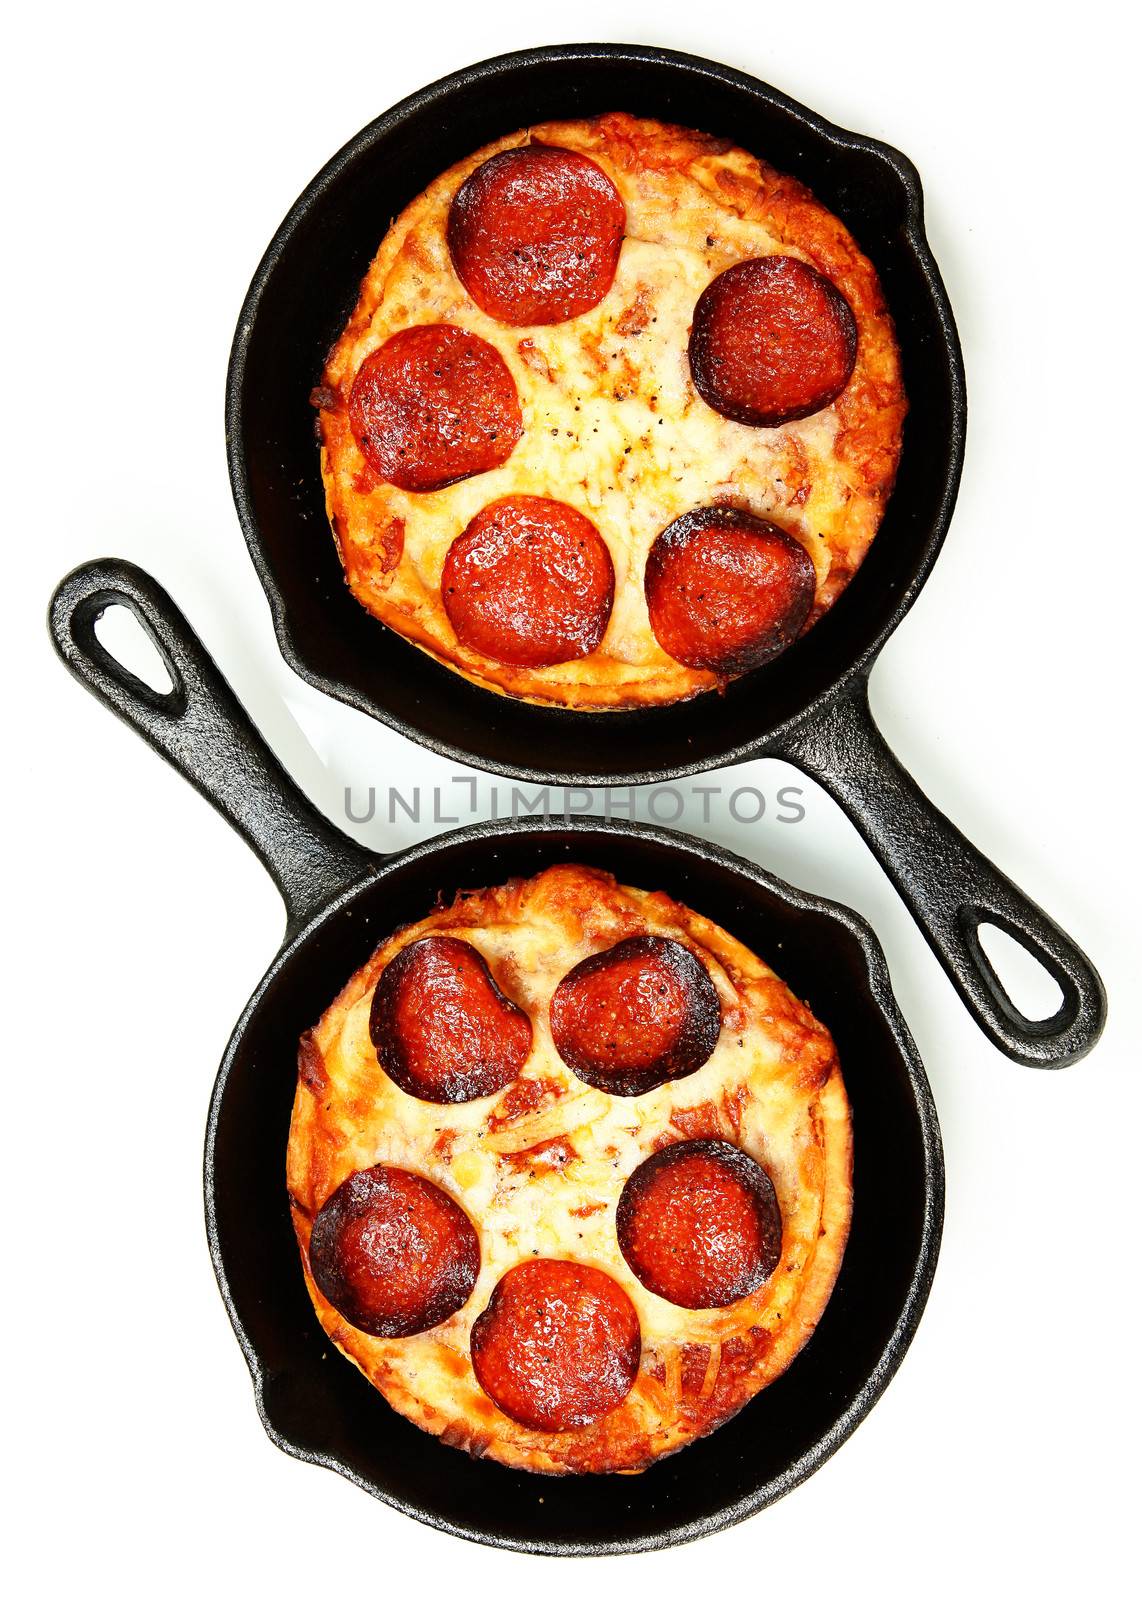 Two Single Serve Skillet Peperonni Pizzas Over White